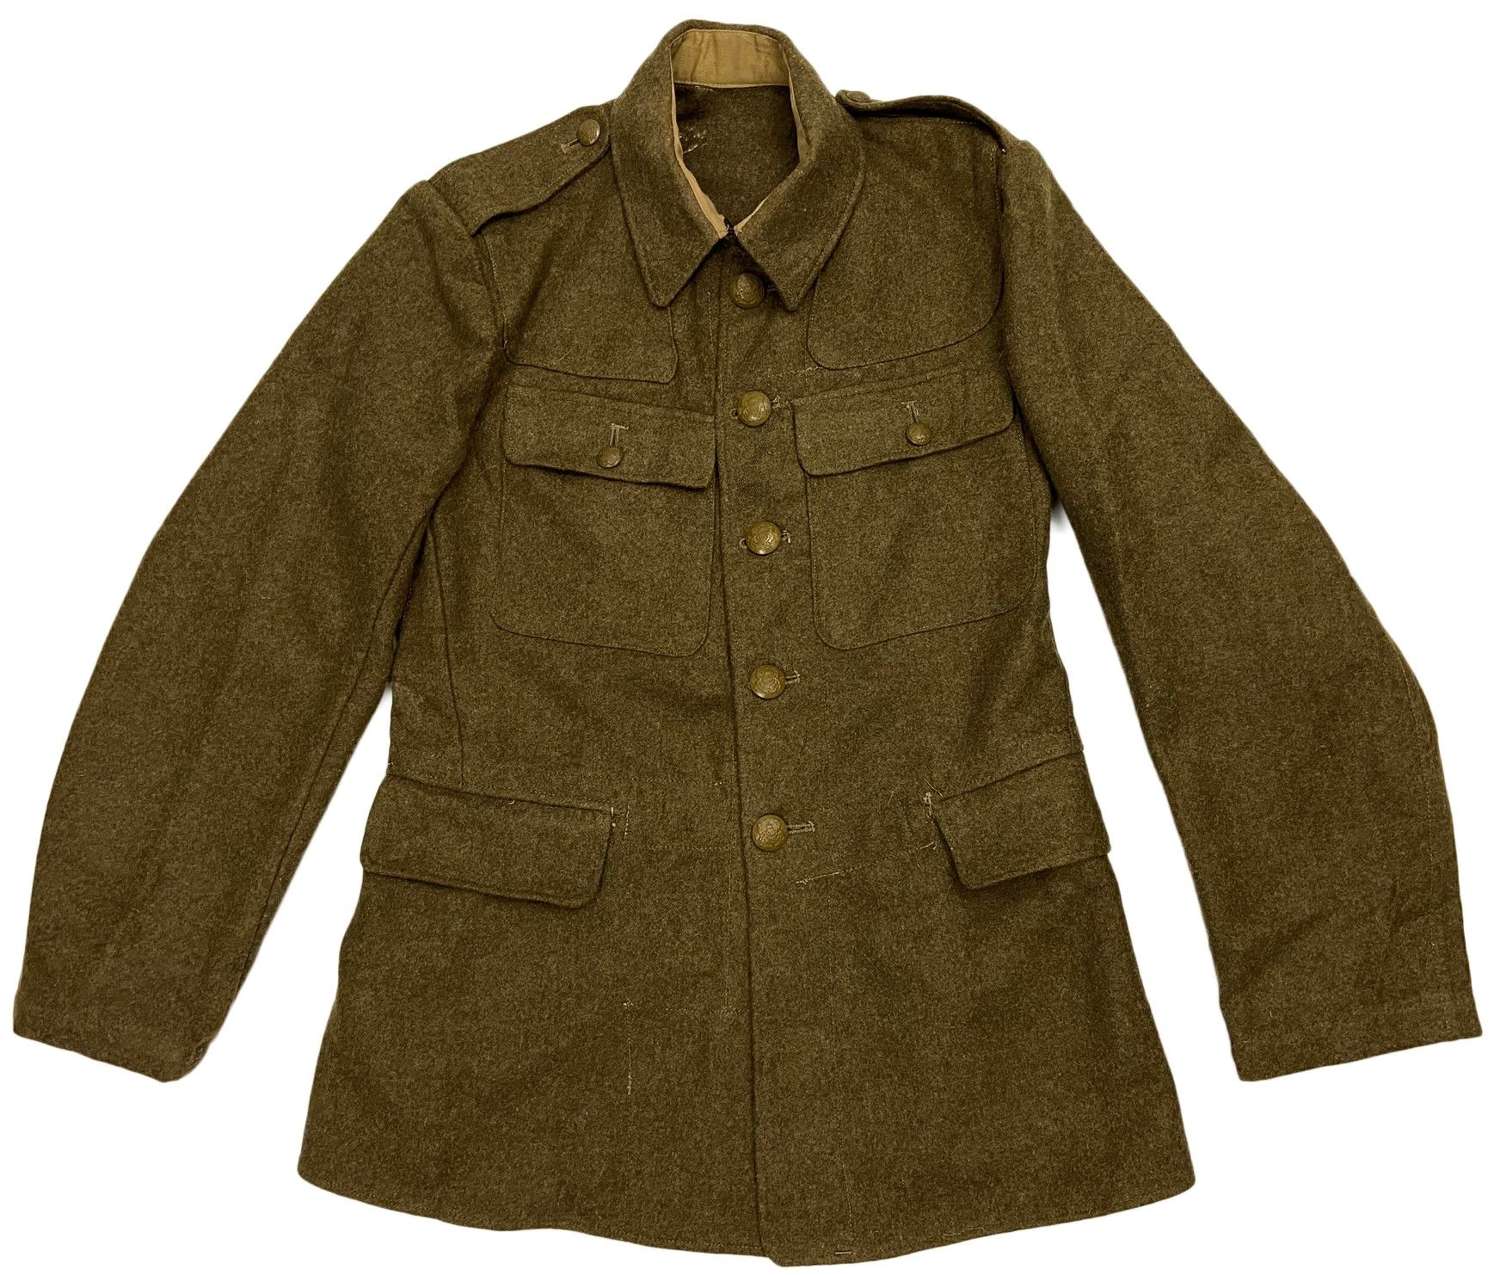 Original 1943 Dated British Army Service Dress Tunic - Size 14